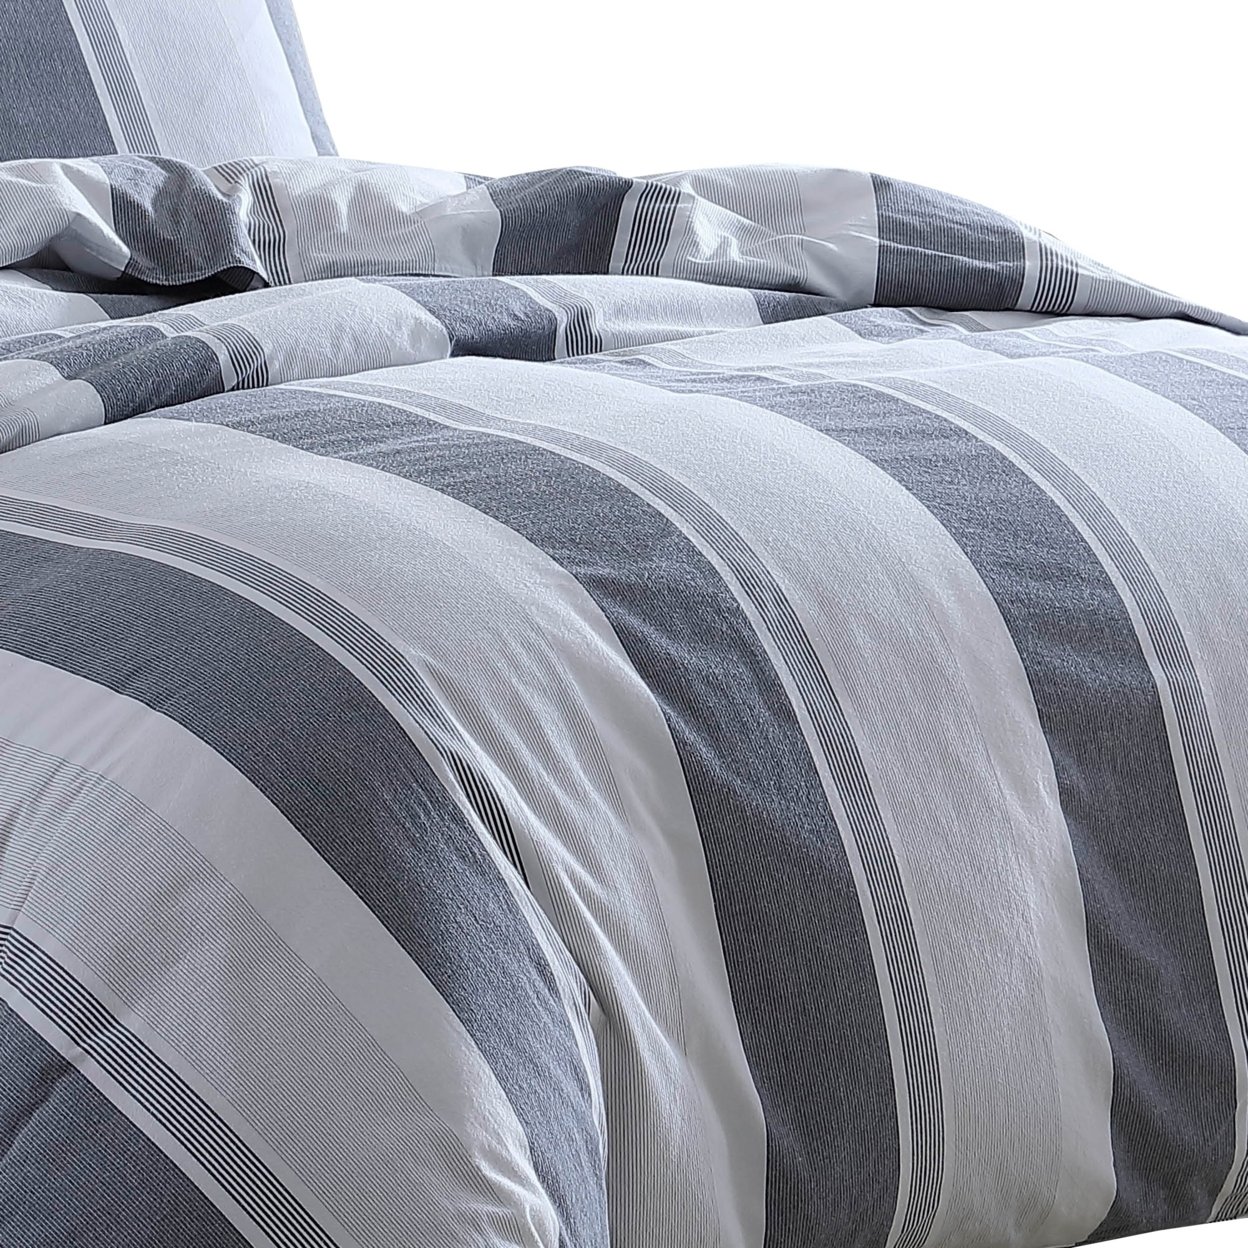 3 Piece Queen Comforter Set With Broad Stripes, Gray- Saltoro Sherpi